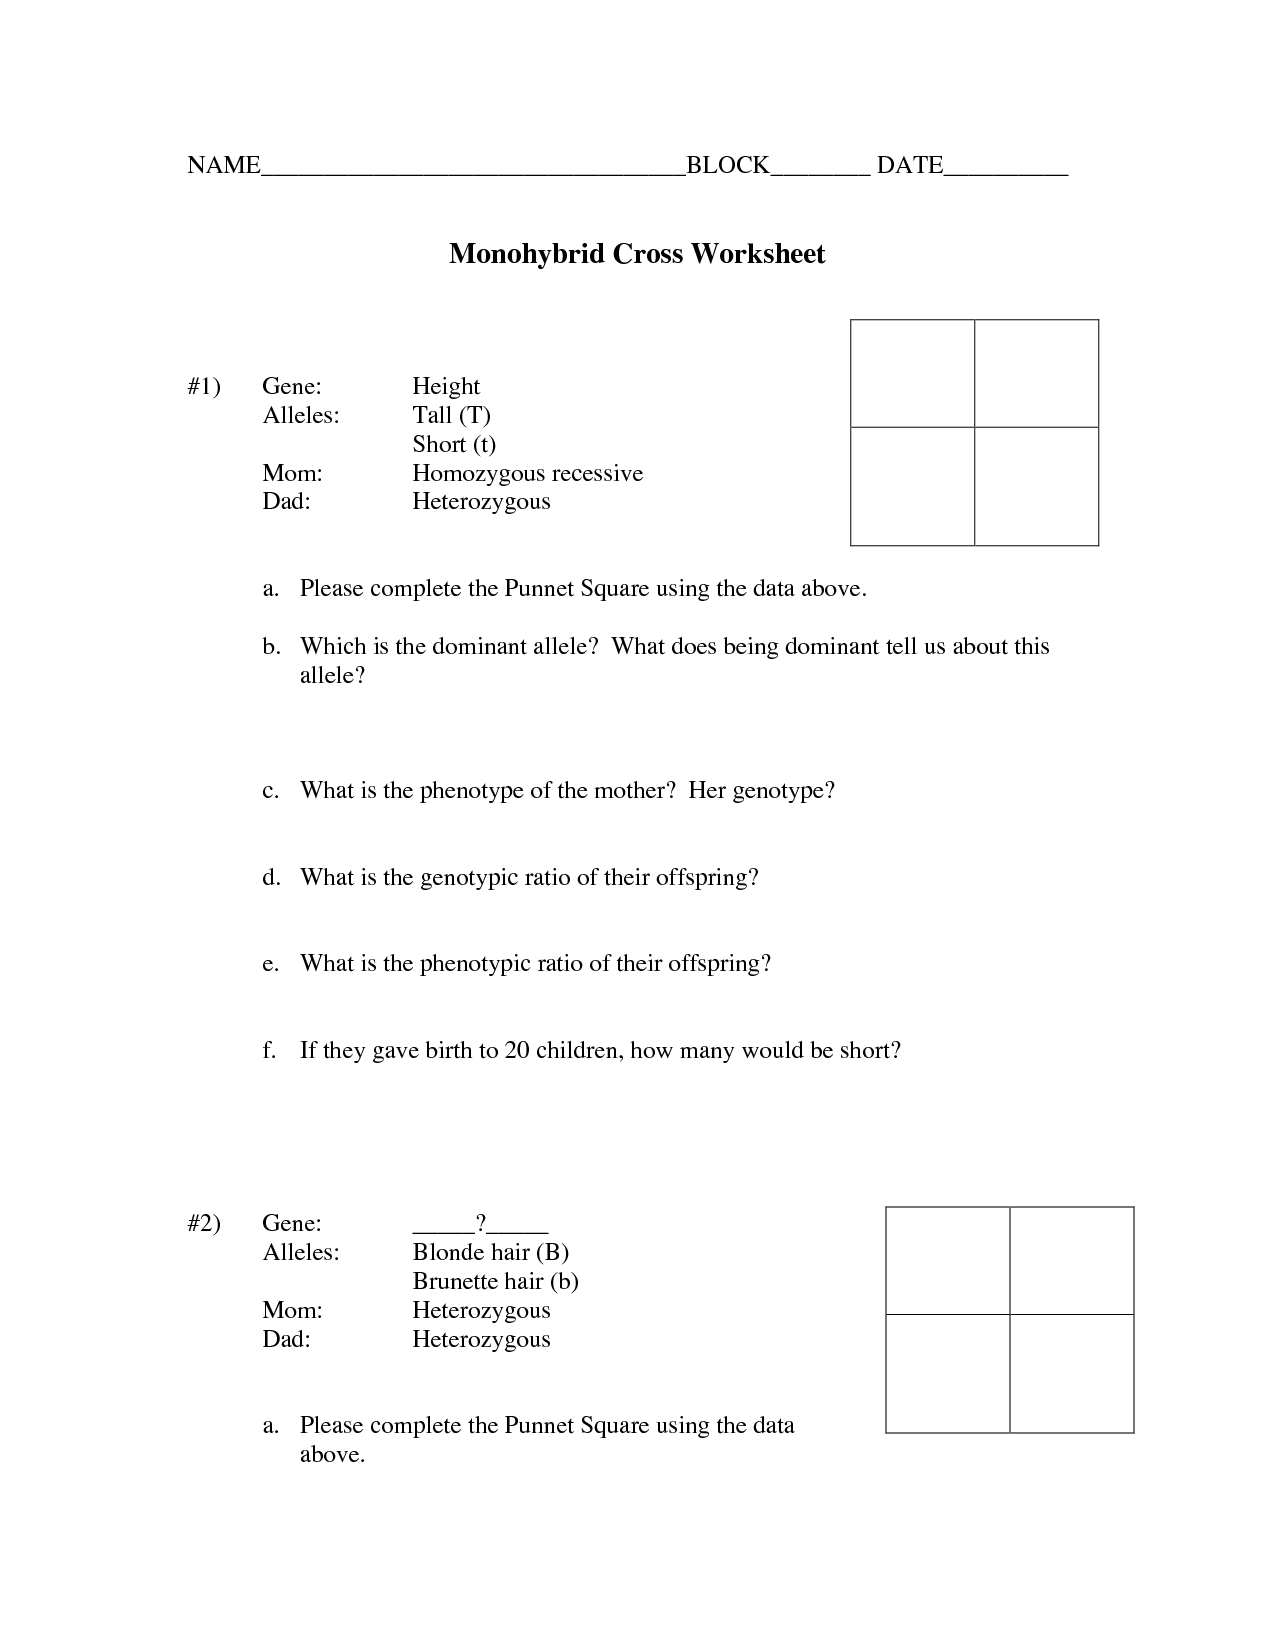 Monohybrid Cross Worksheet Answers Image